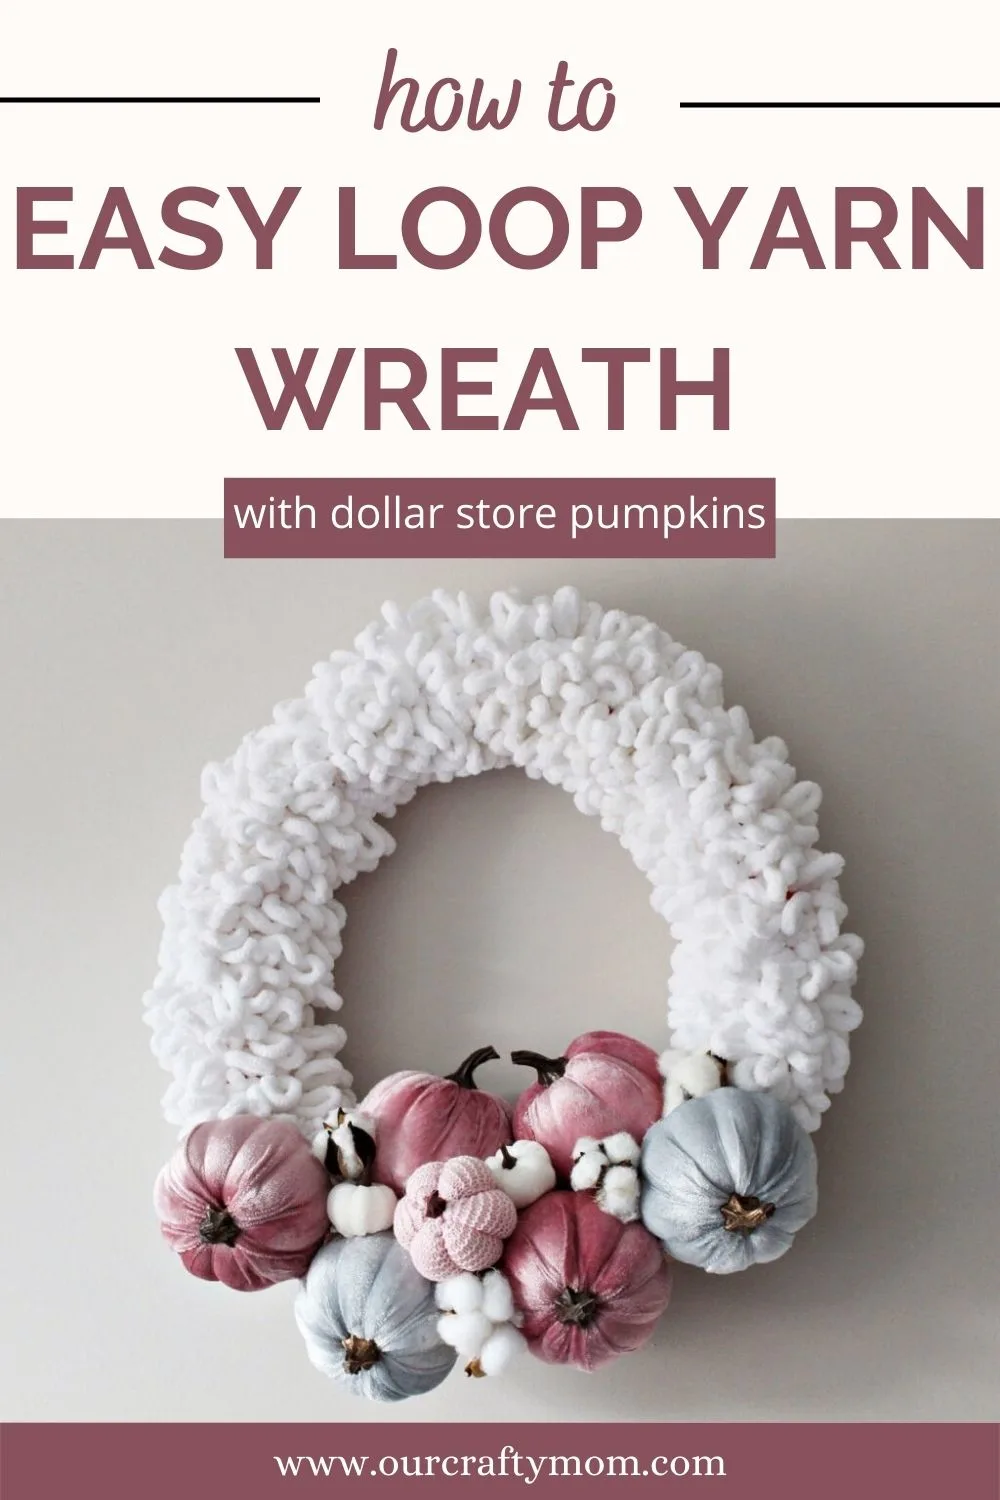 white loop yarn wreath with velvet pumpkins from dollar tree